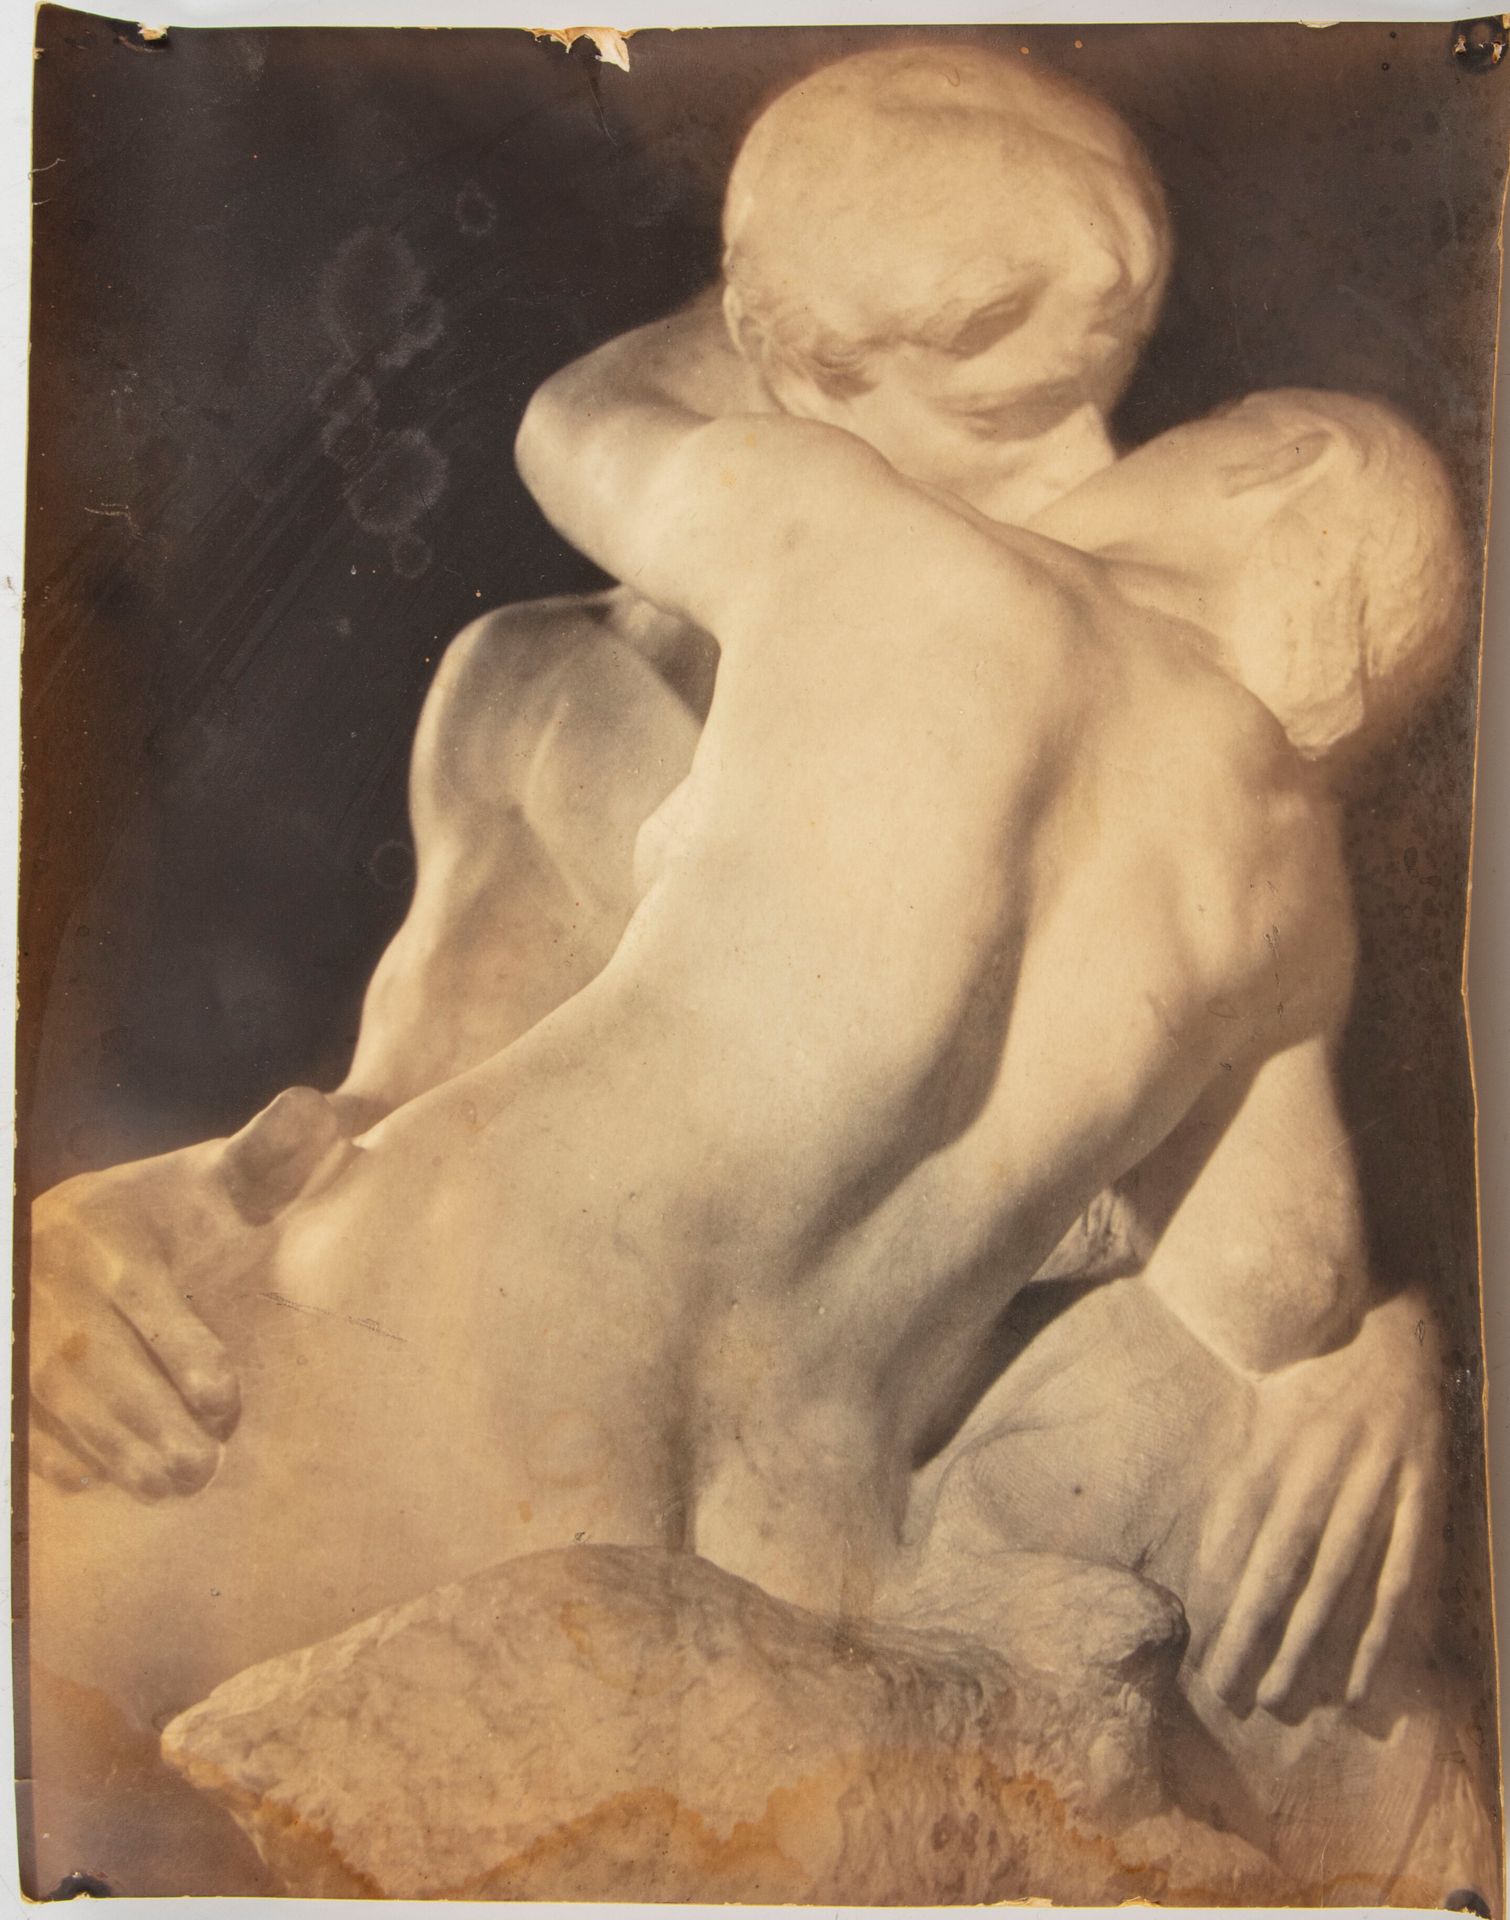 RUDOMINE Albert RUDOMINE (1892-1975)

Le Baiser de Rodin

Tirage argentique 

Ta&hellip;